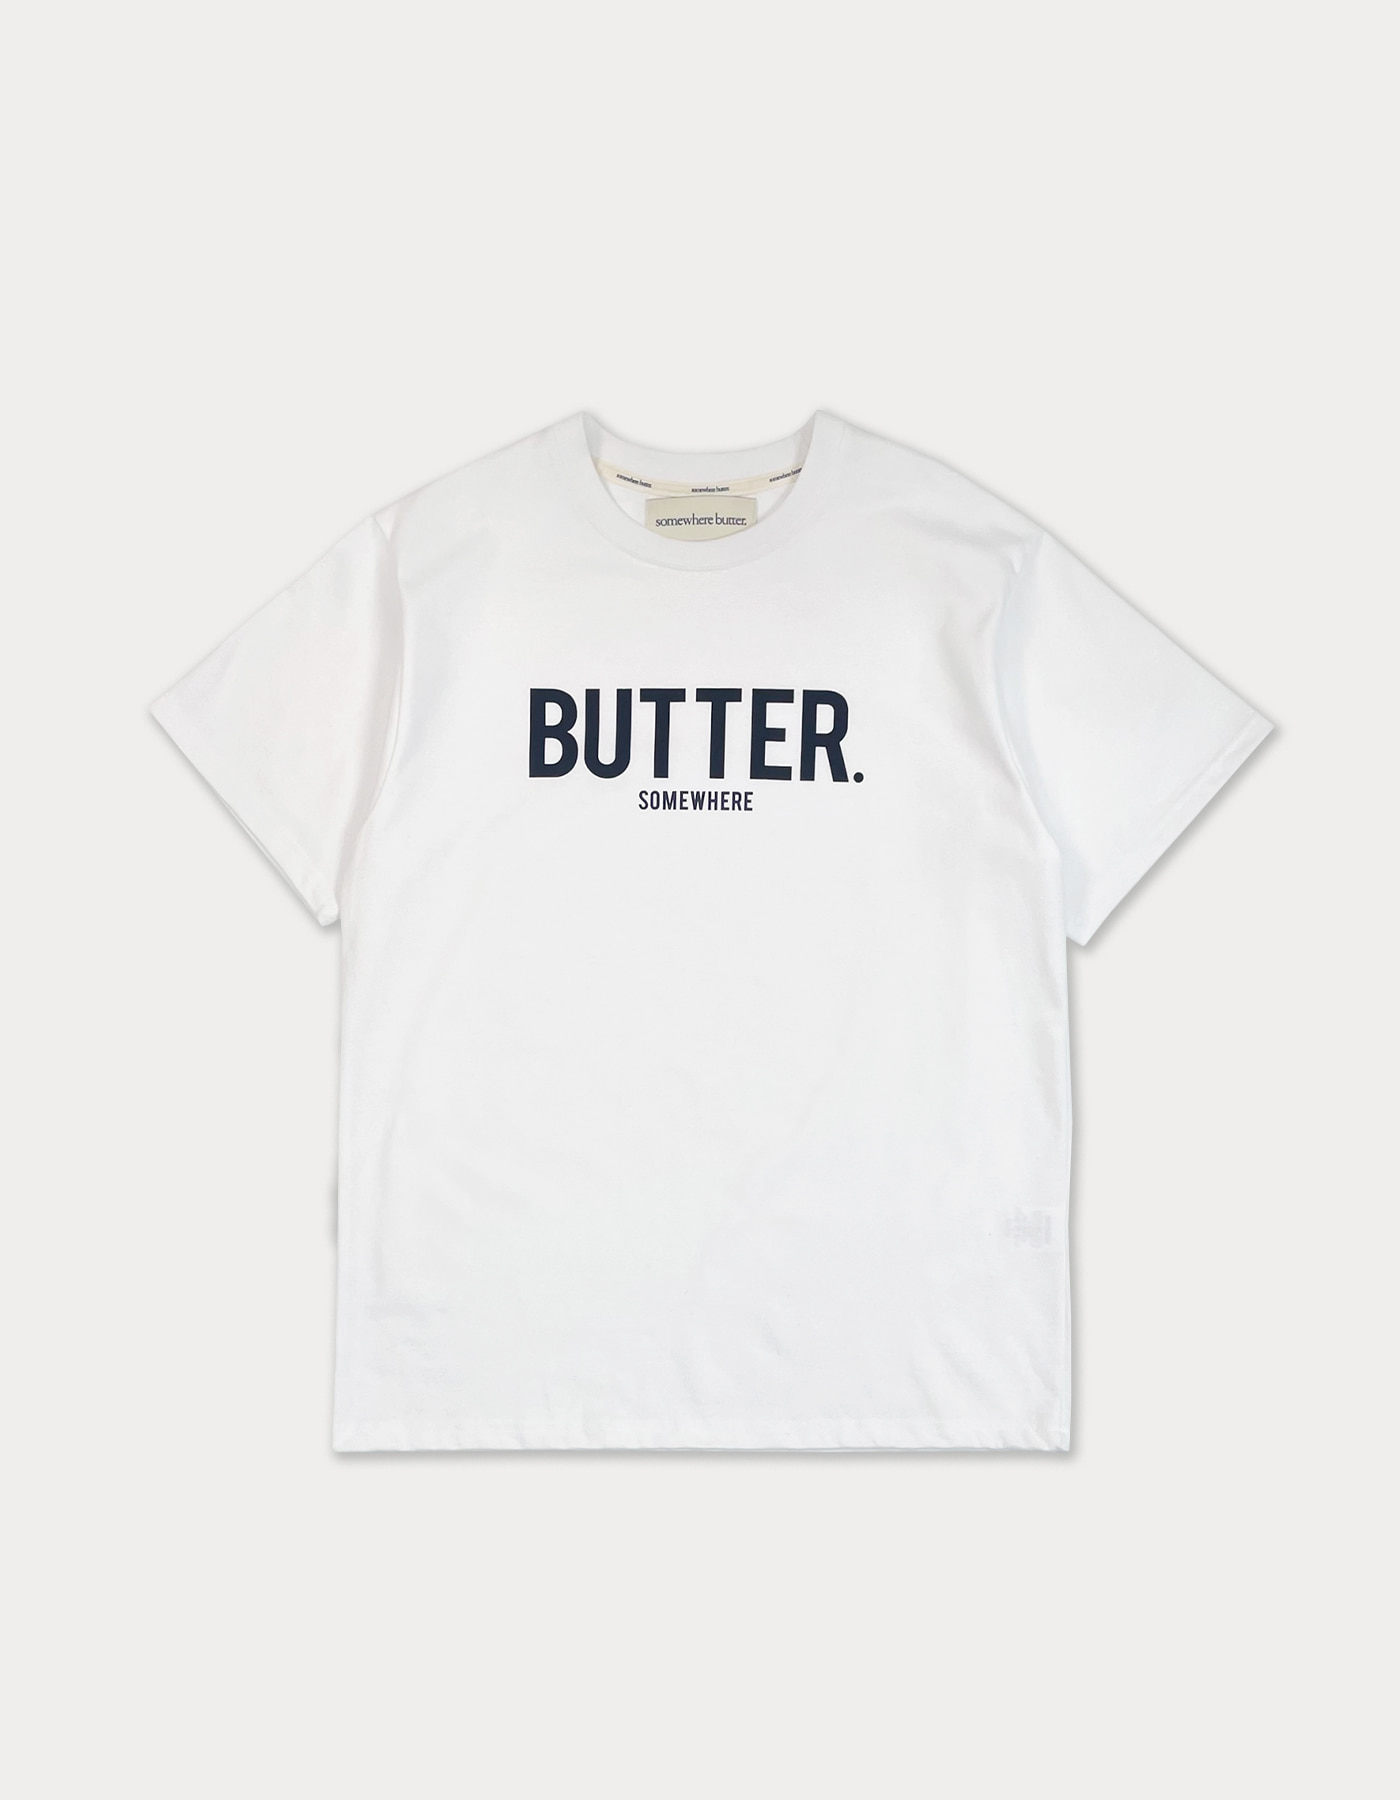 butter top(regular fit) - ivory